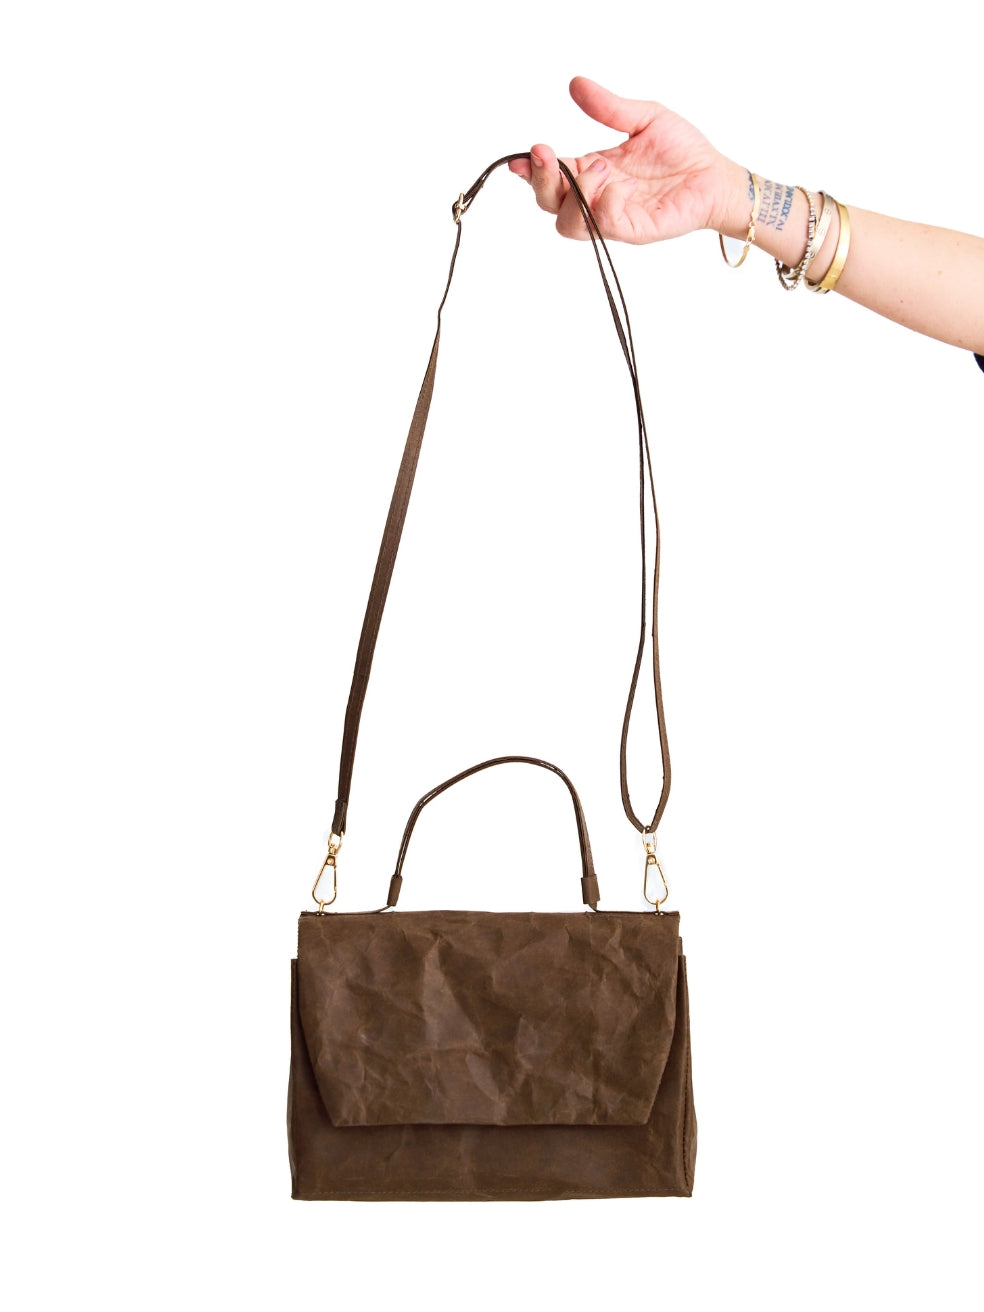 Small paper purse vintage brown eco friendly recycled materials handbag canada